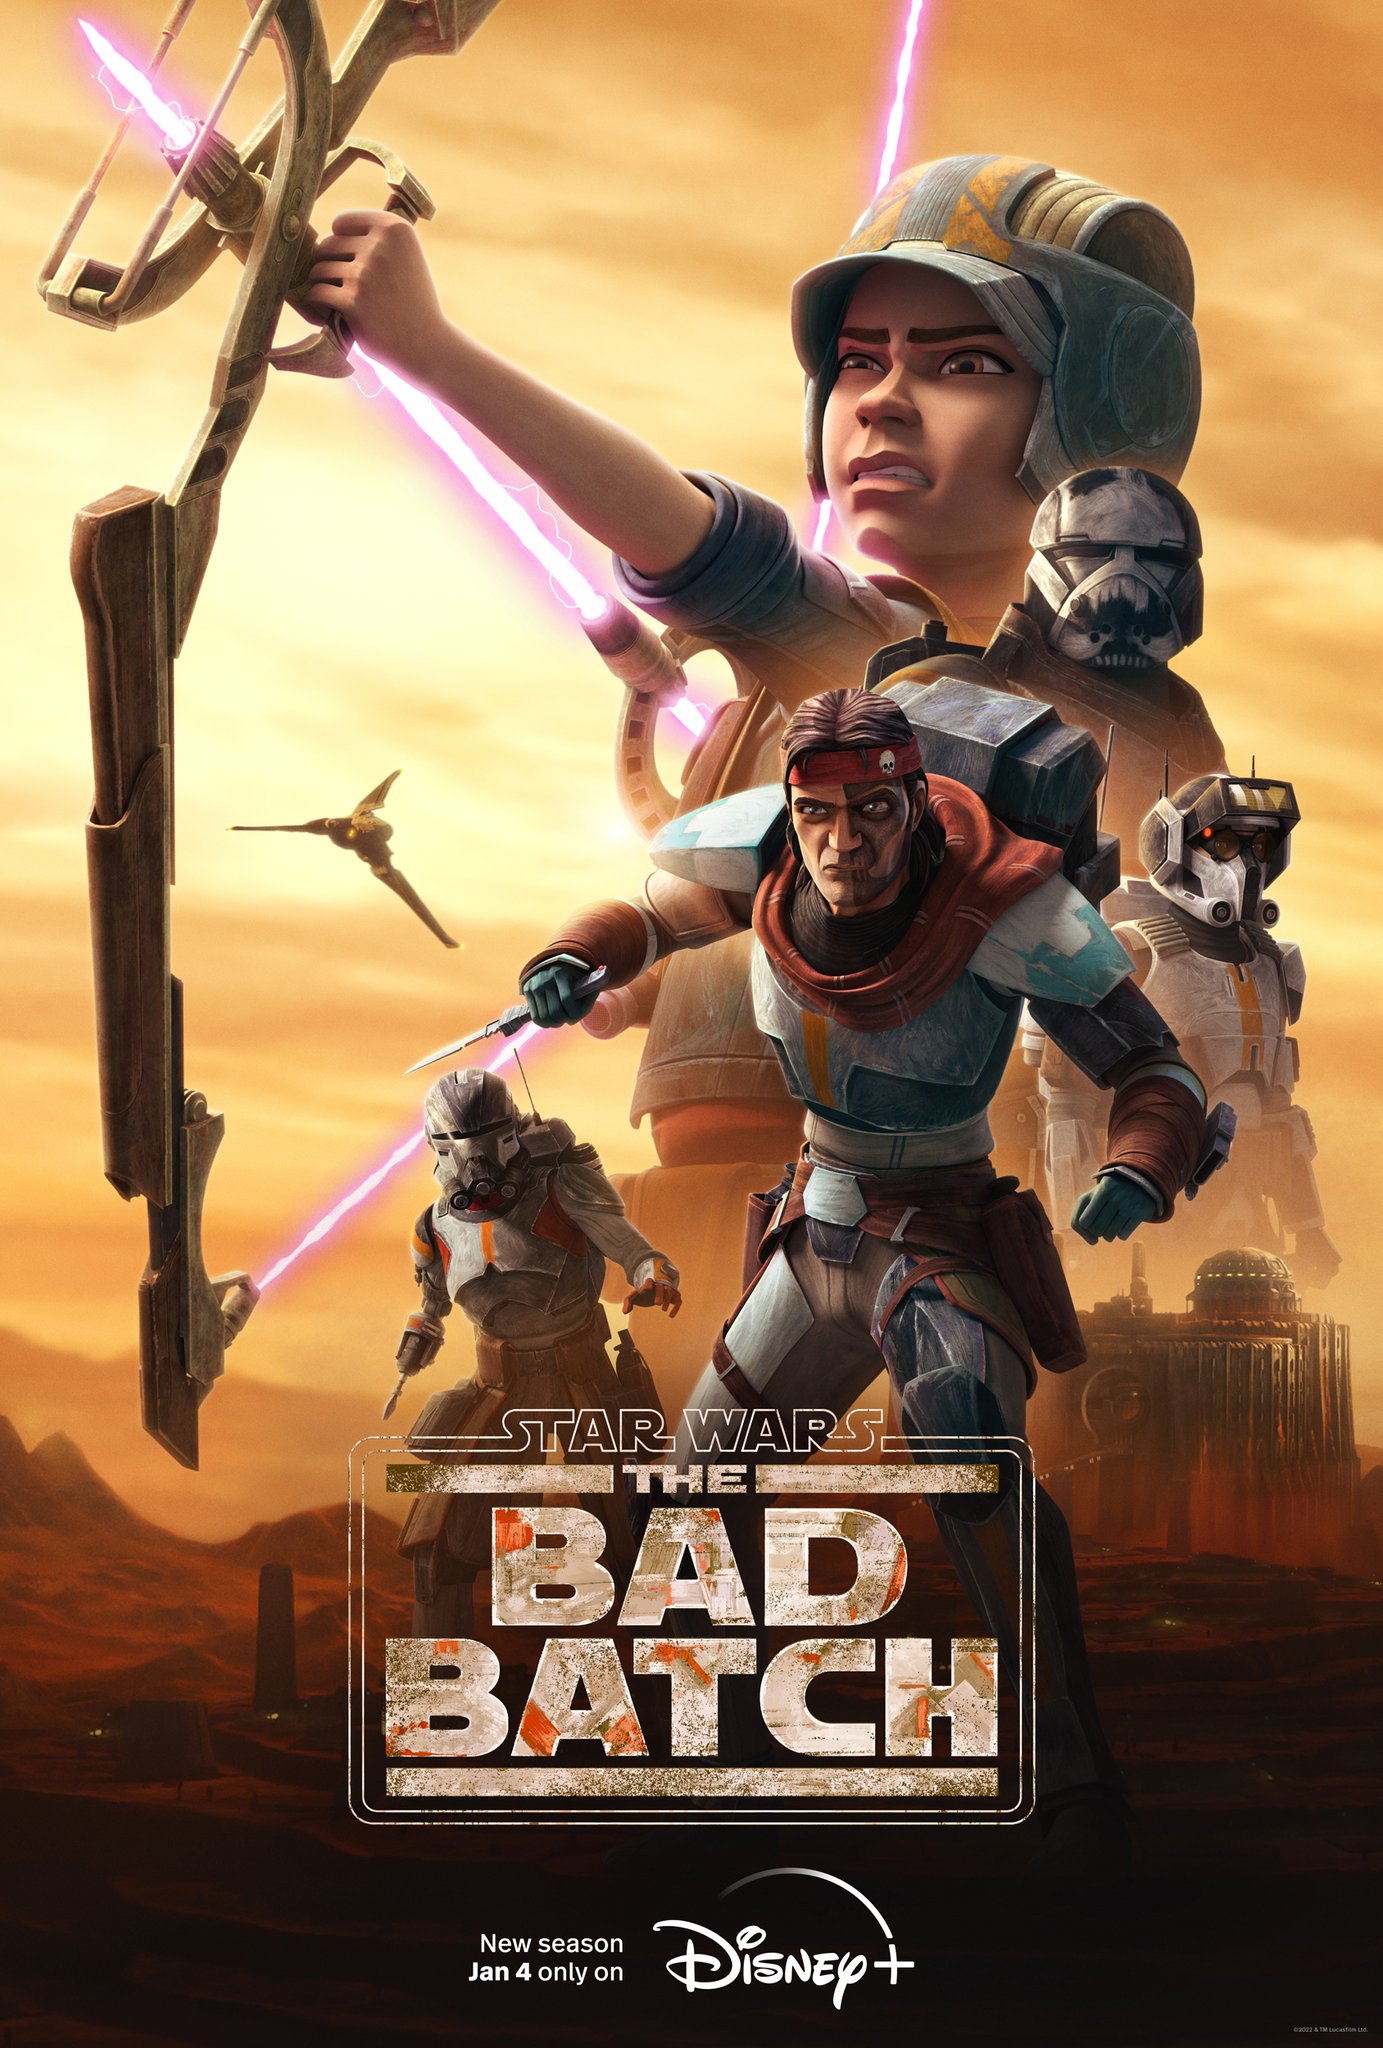 Star Wars The Bad Batch S2 is terug vanaf 4 januari 2023 op Disney Plus België 